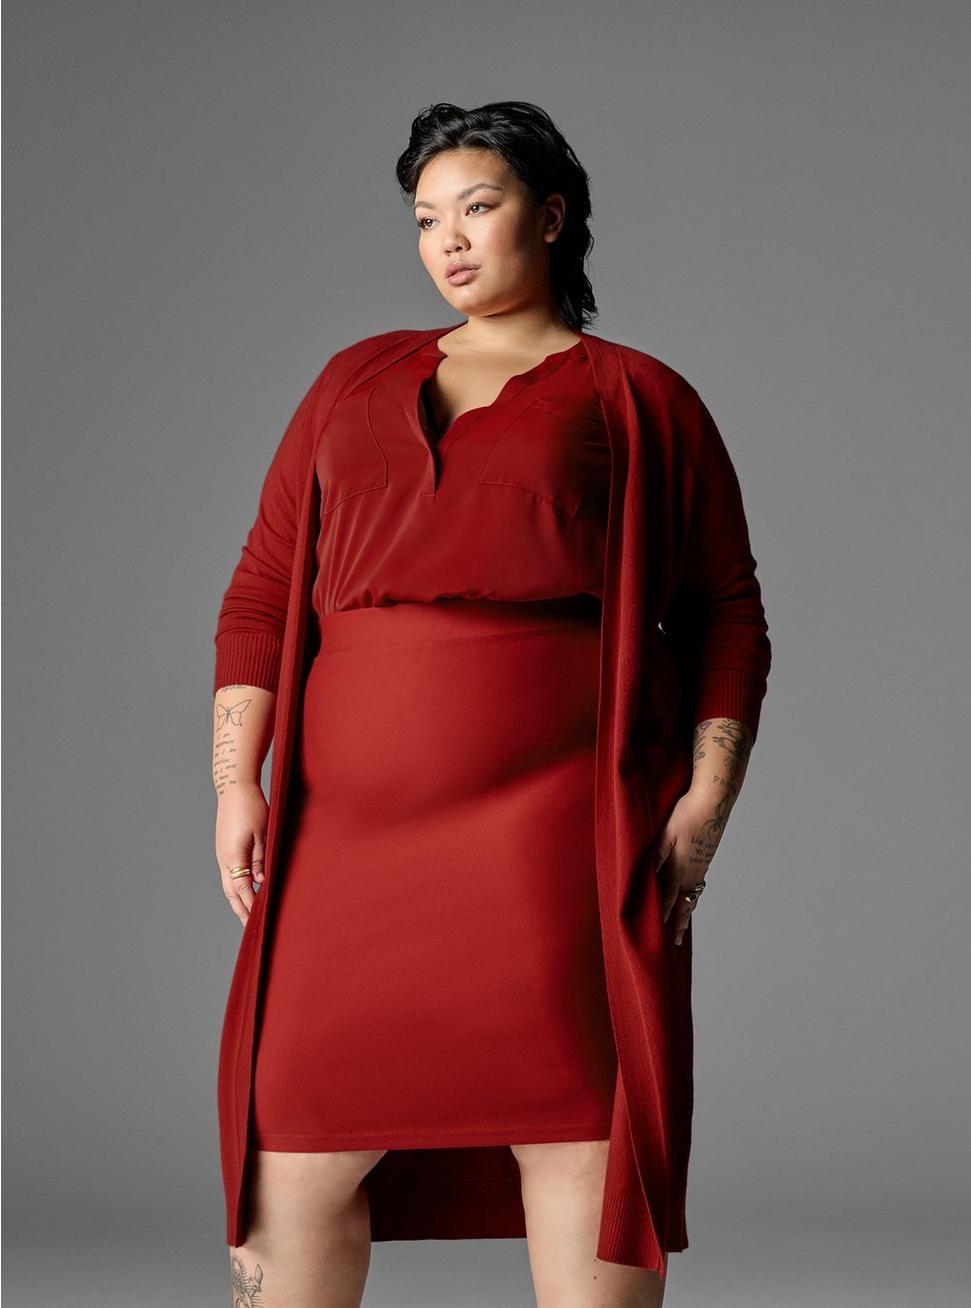 Harper Studio Crepe de Chine Pullover 3/4 Sleeve Blouse, DARK RED, hi-res